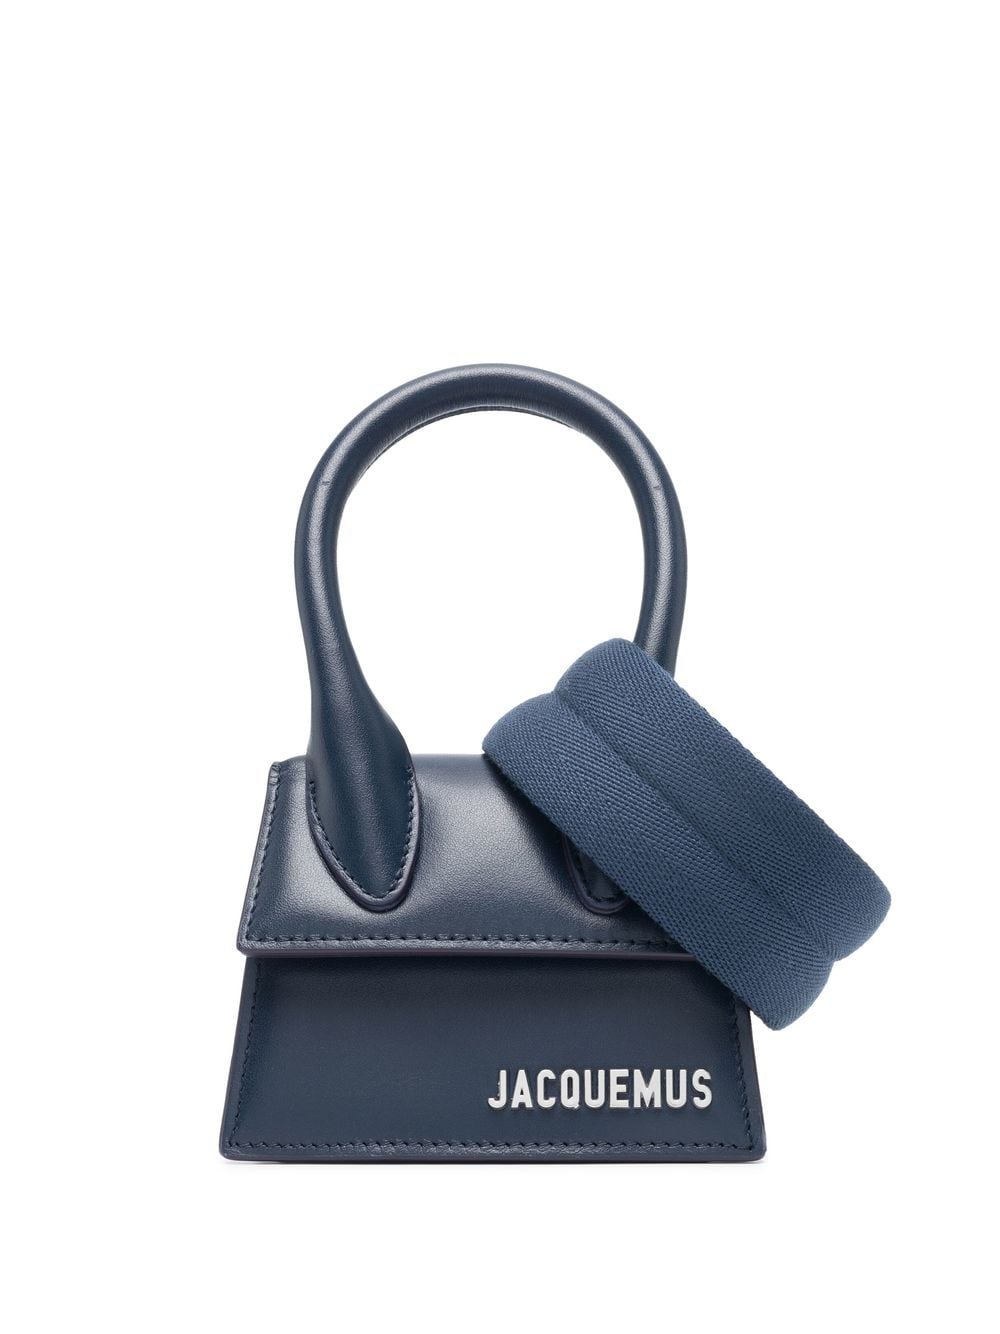 Jacquemus Le Chiquito Homme Schultertasche - Blau von Jacquemus